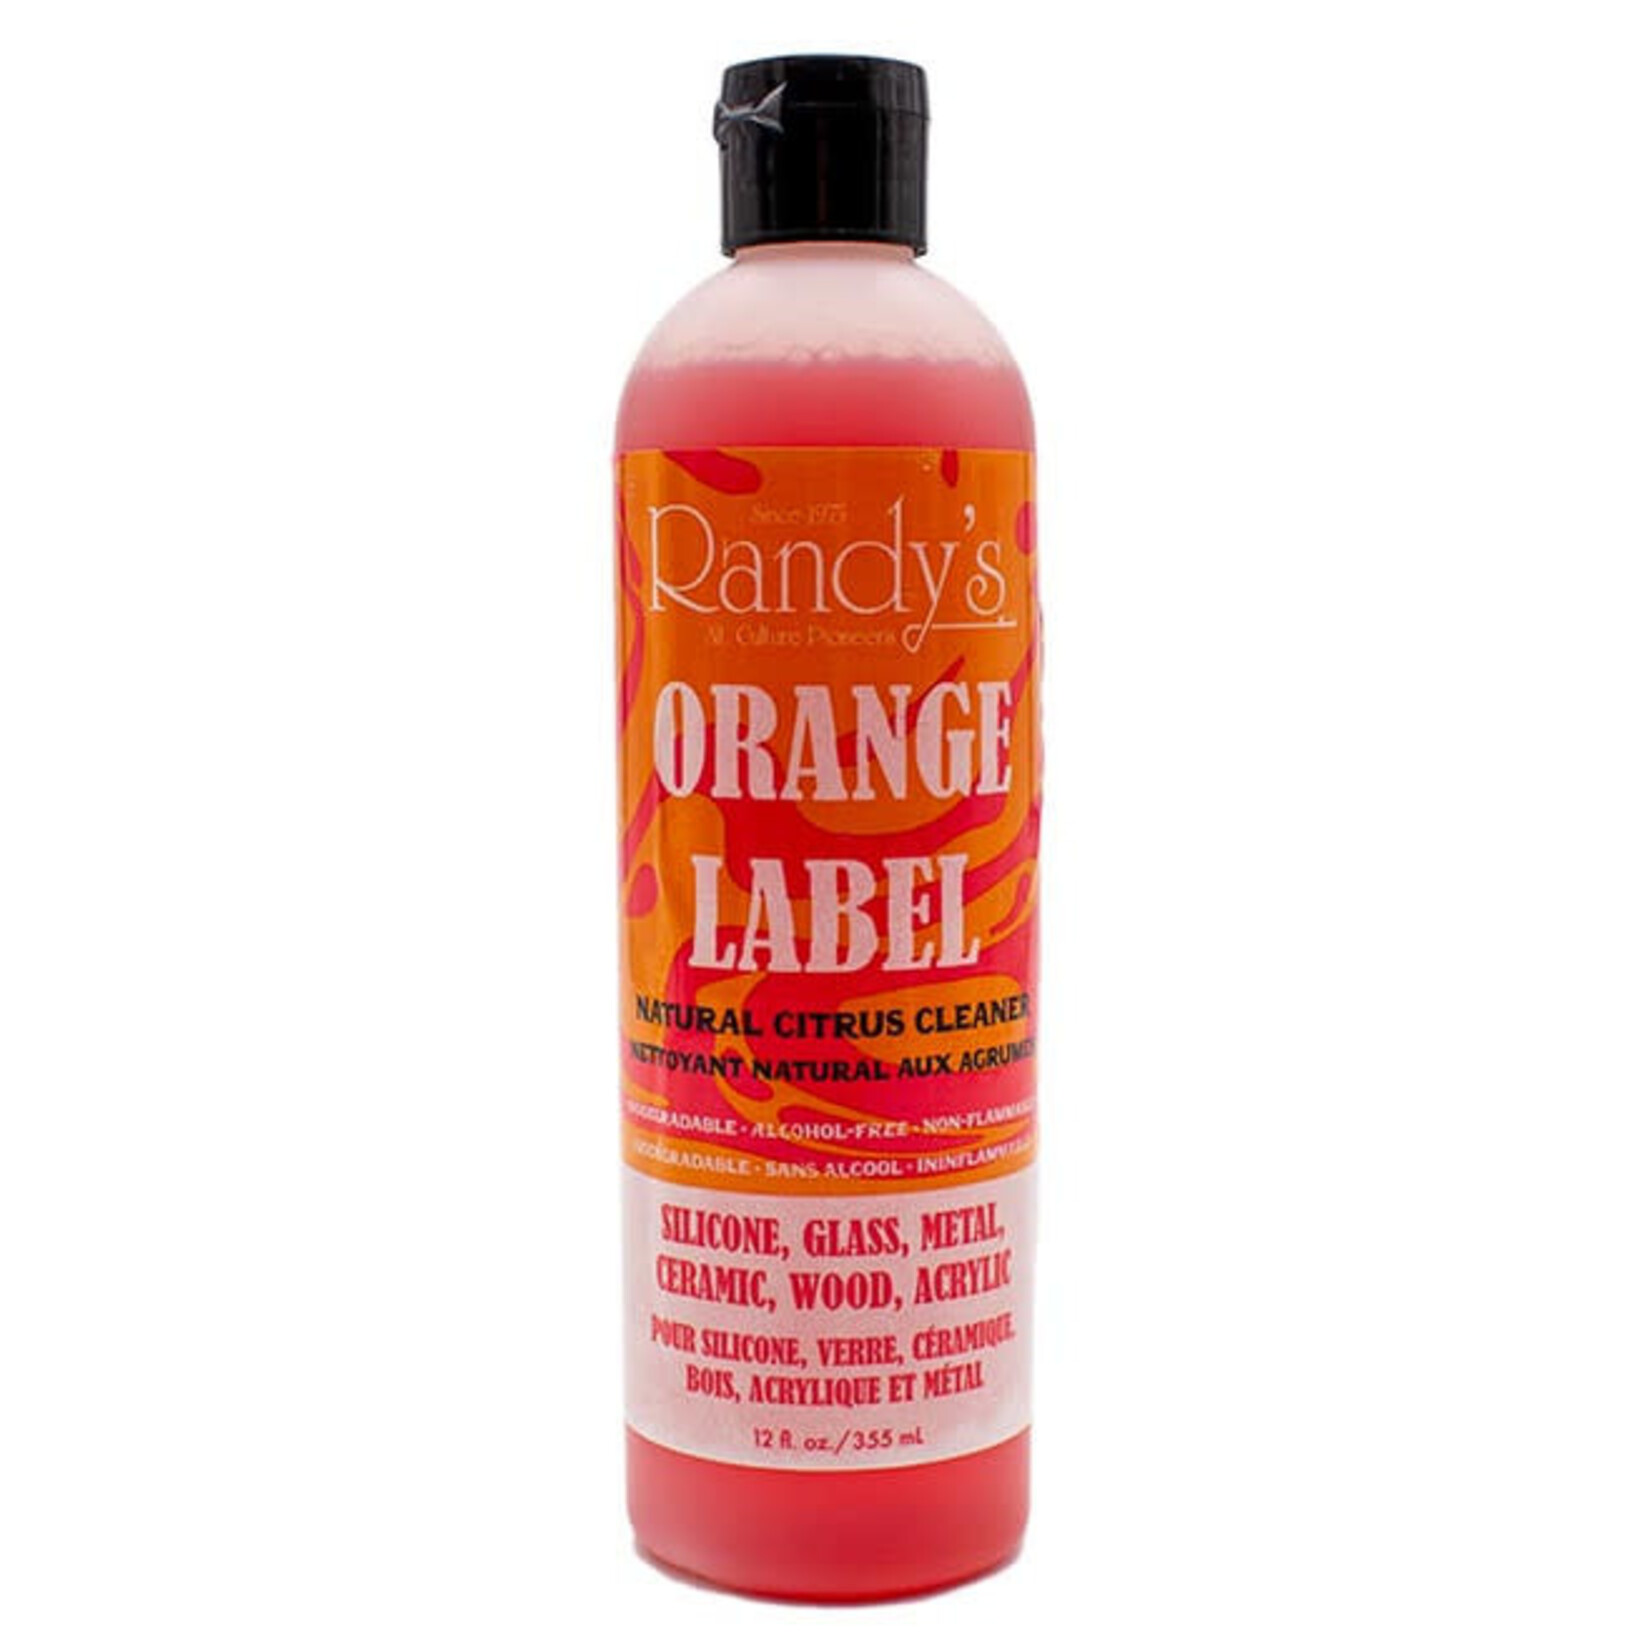 Randy's Randy's Cleaner